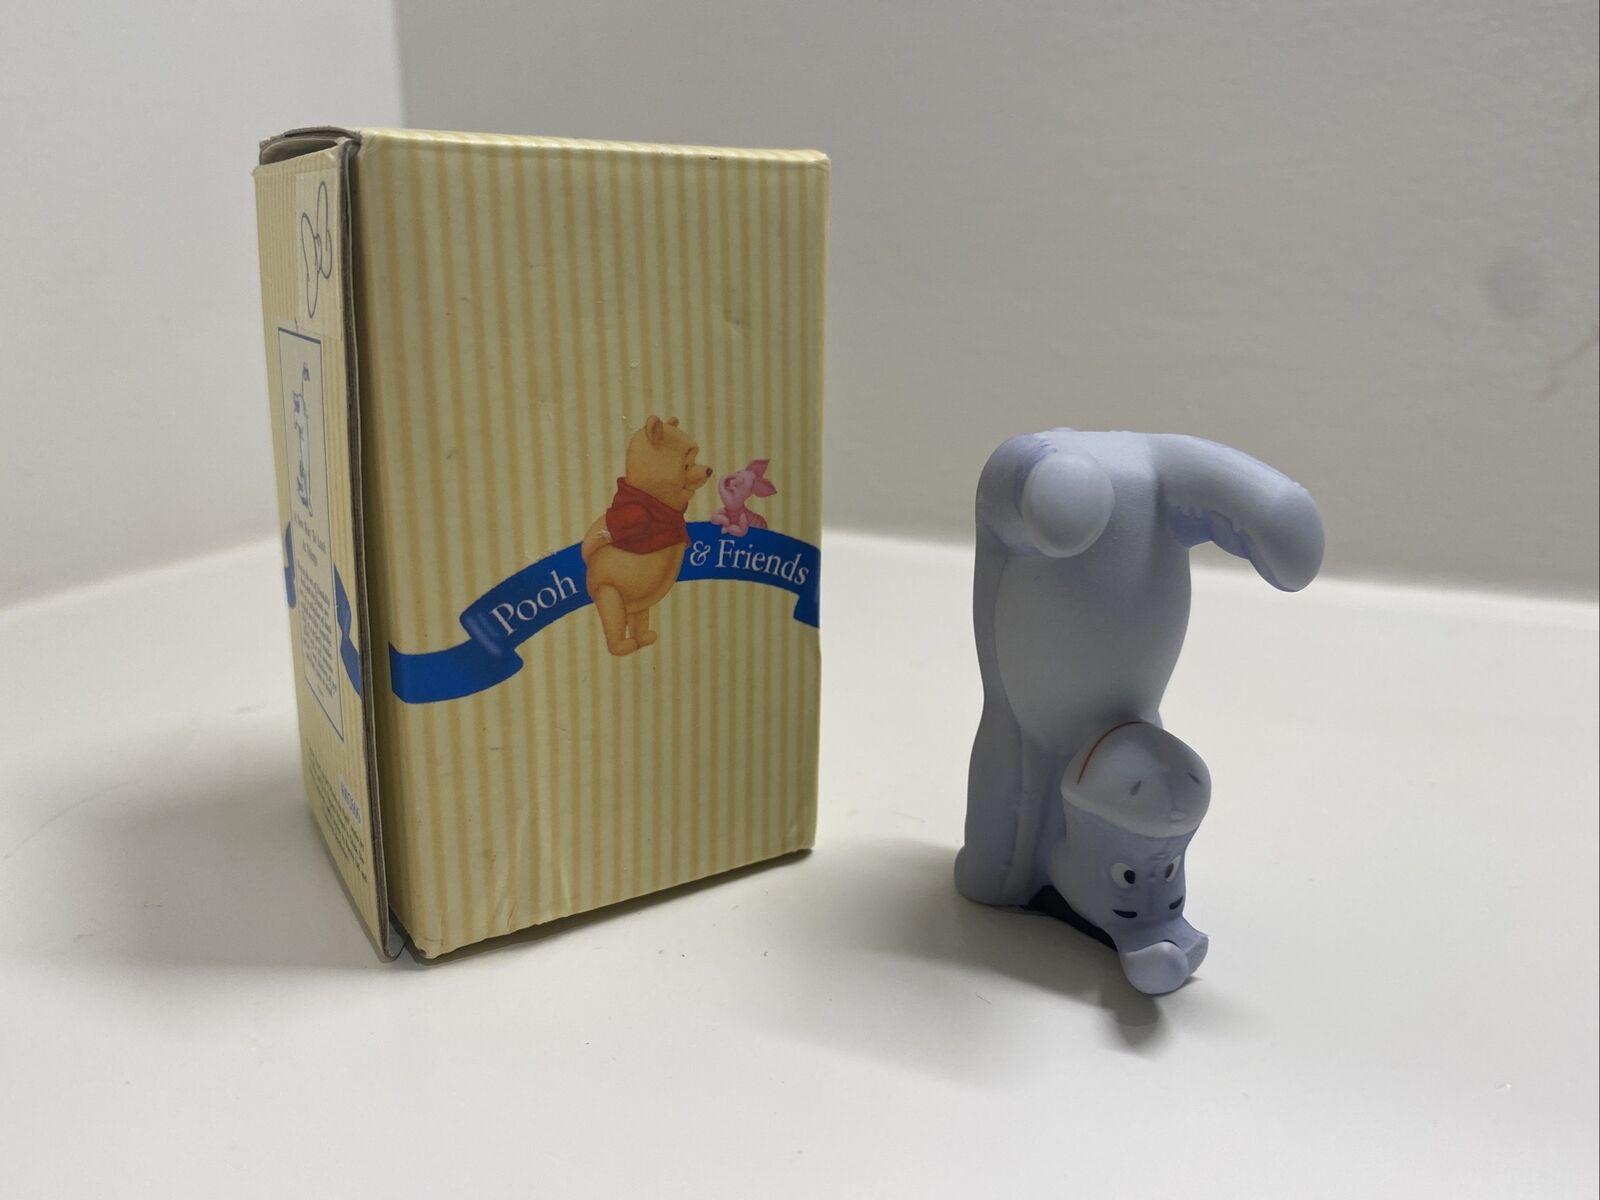 Pooh & Friends Ceramic Eeyore Figurine 